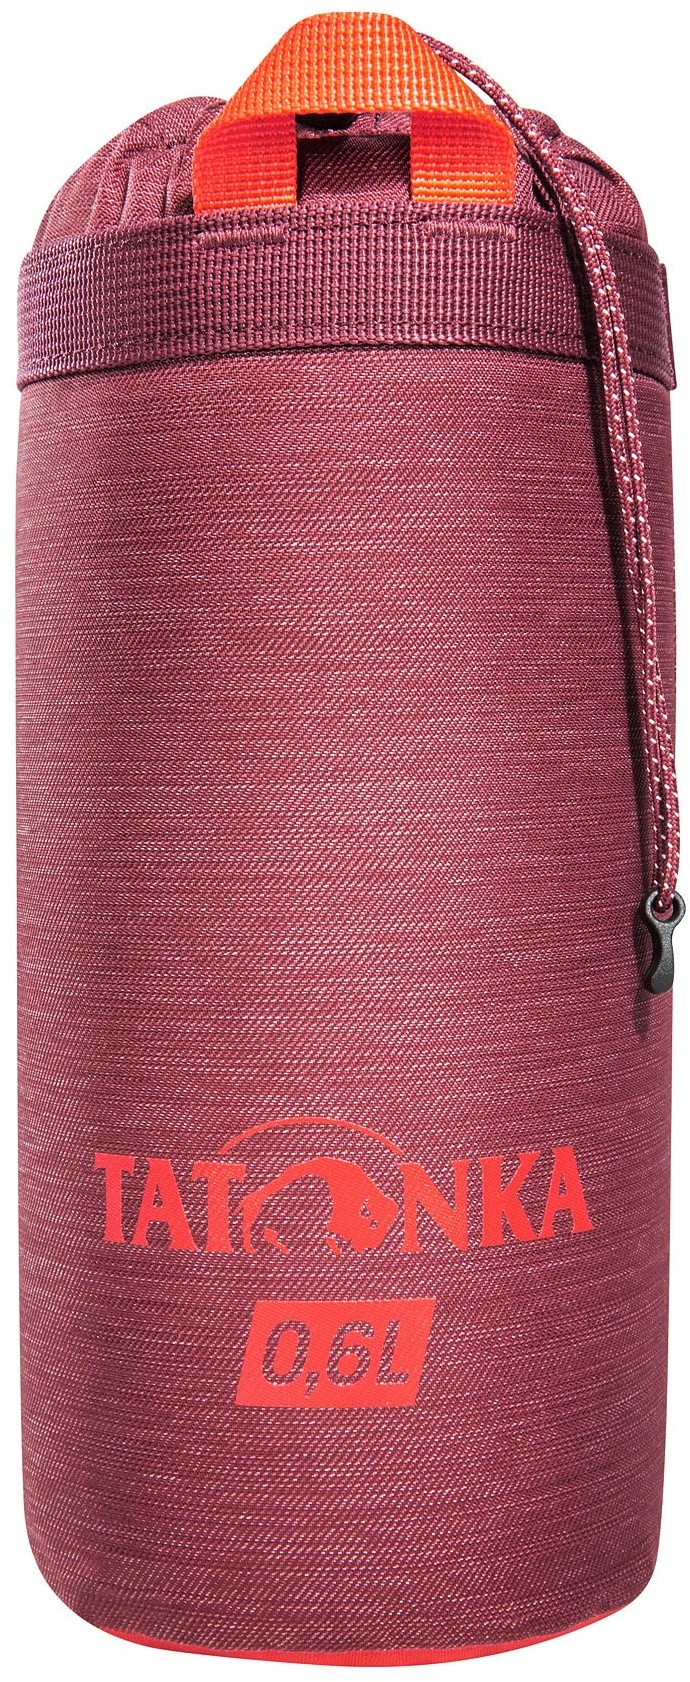 Tatonka Thermo Bottle Cover - Isolierhülle für Trinkflaschen (0,6 / 1 / 1,5 Liter), Bordeaux Red (0.6l)